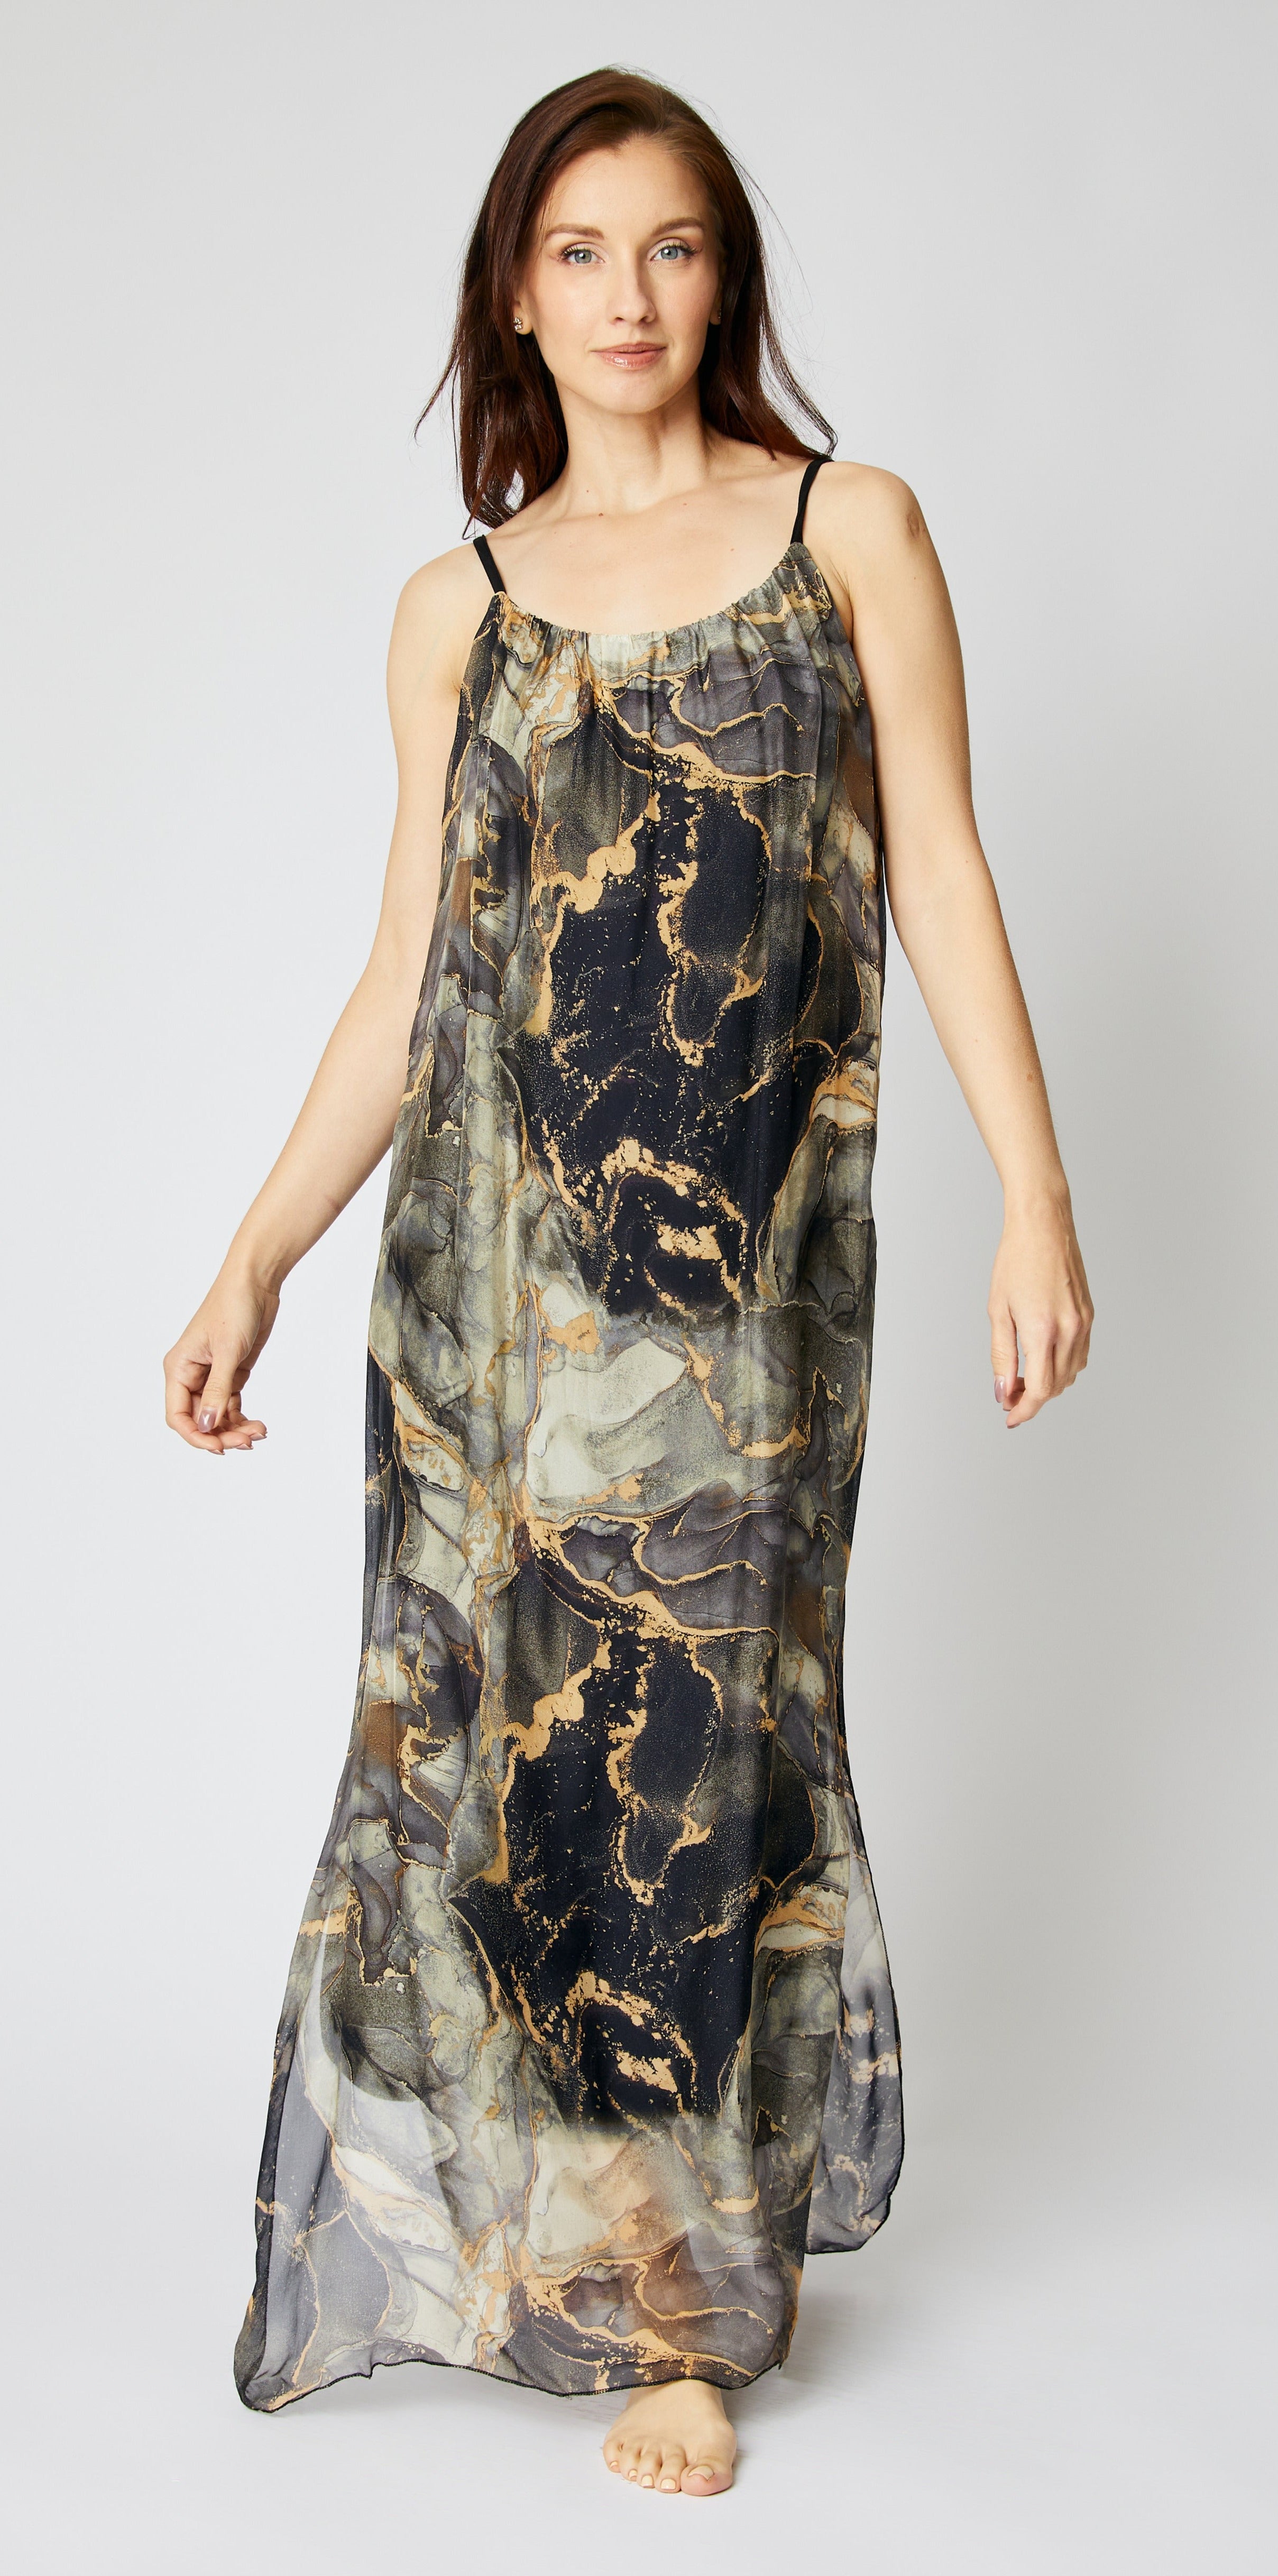 Italian Silk Tank Dress (Four Colors) - Jacqueline B Clothing